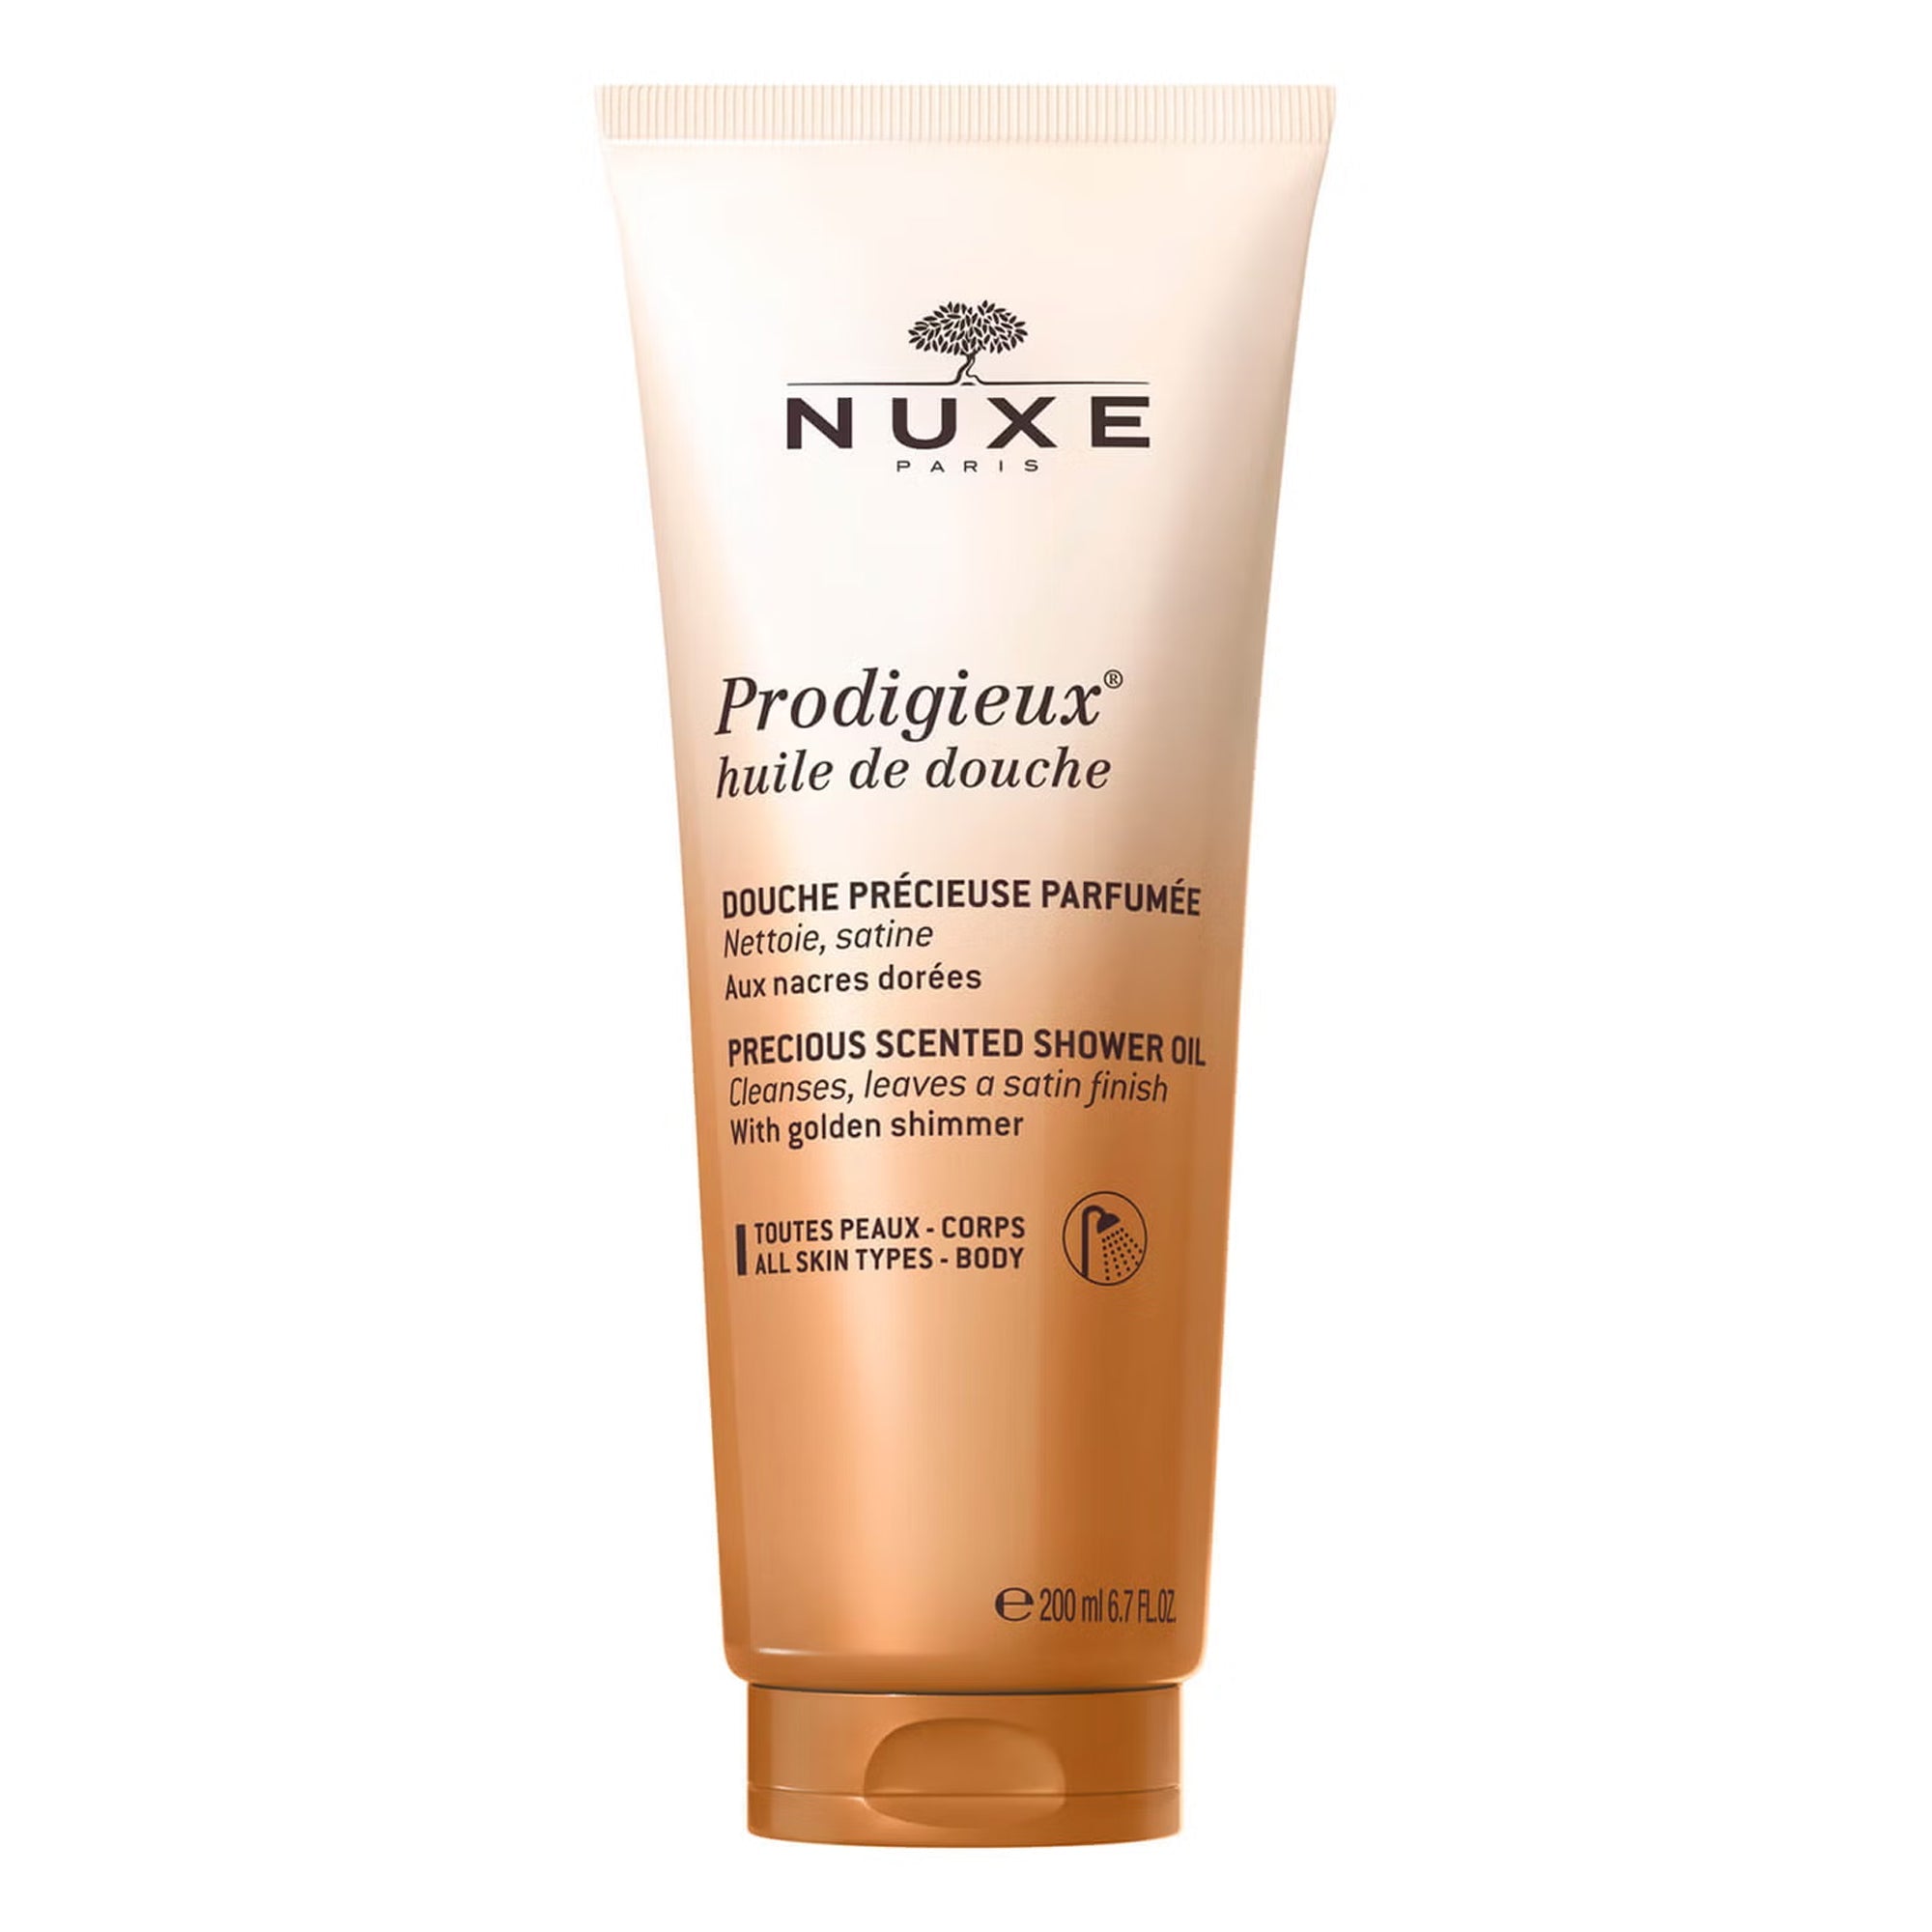 Prodigieux® Precious scented shower oil